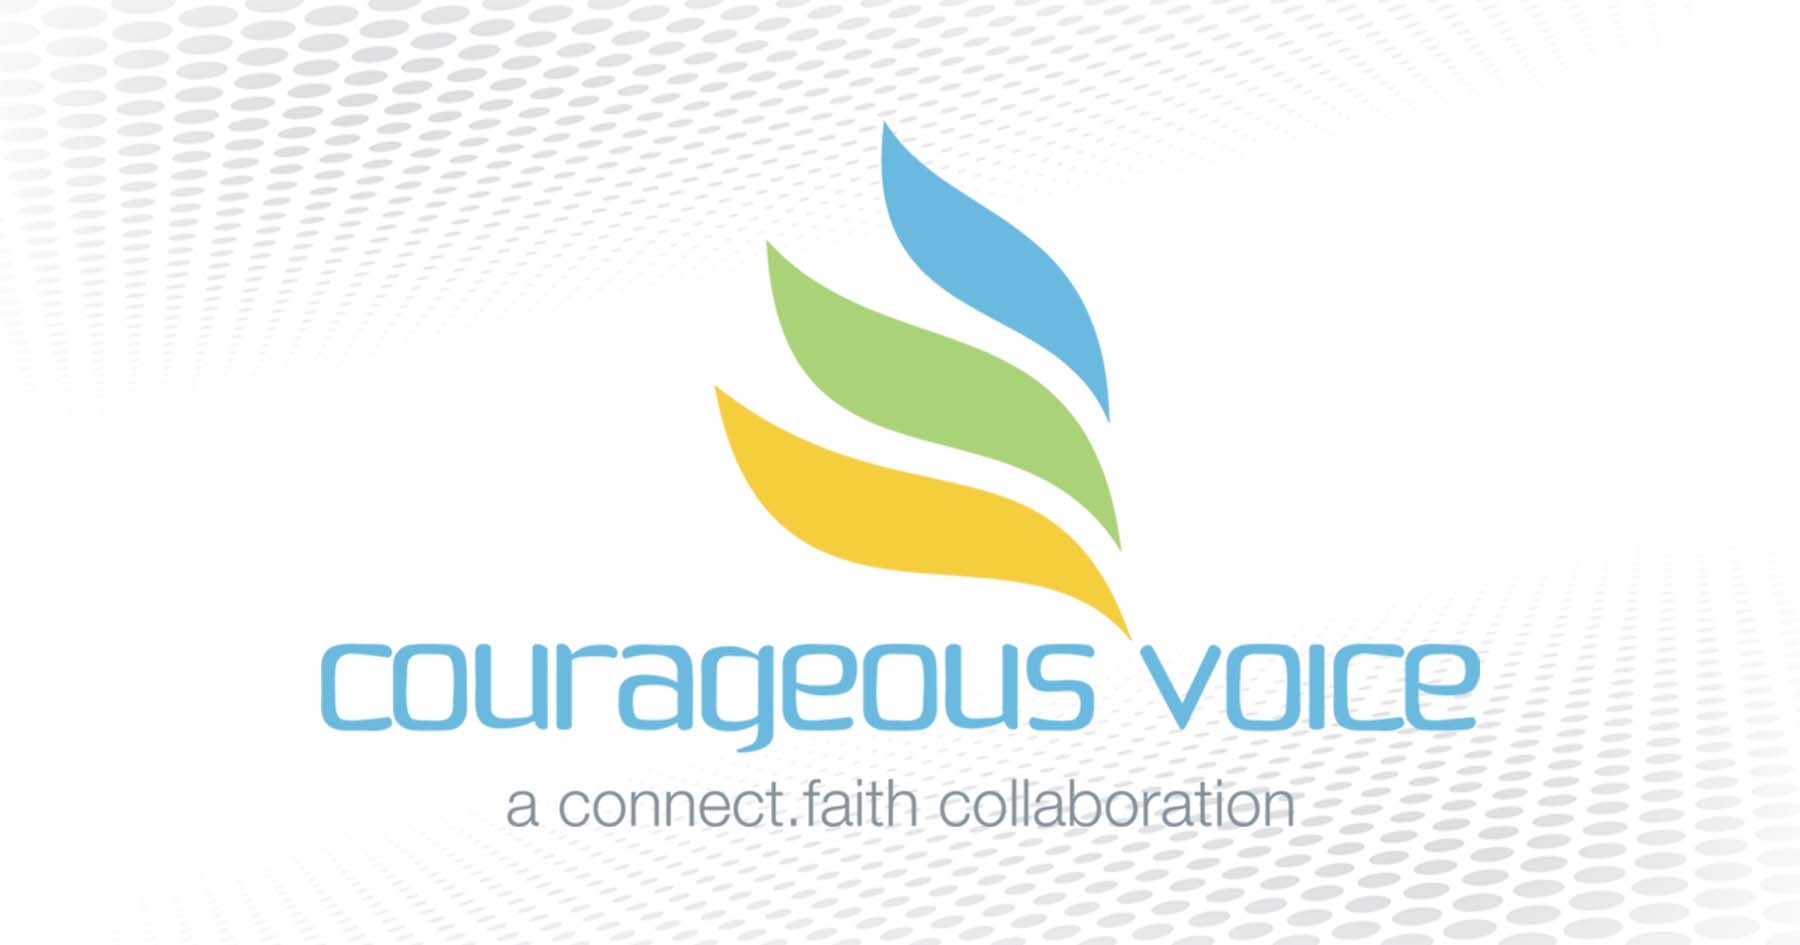 Dr. Sarah Webb | “Courageous Voice” | connect.faith